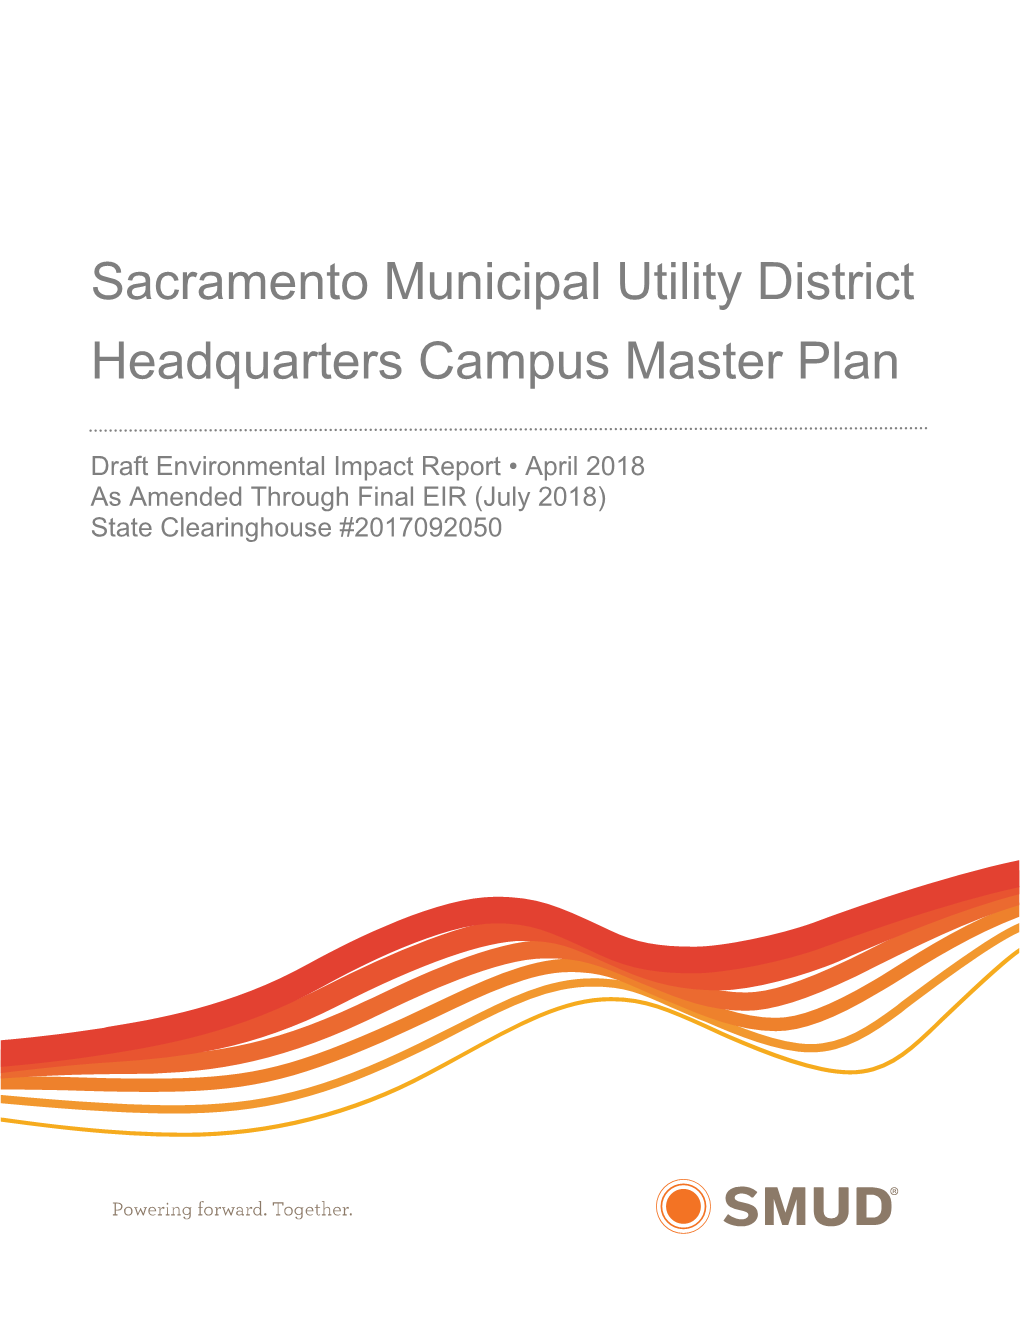 Sacramento Municipal Utility District Headquarters Campus Master Plan